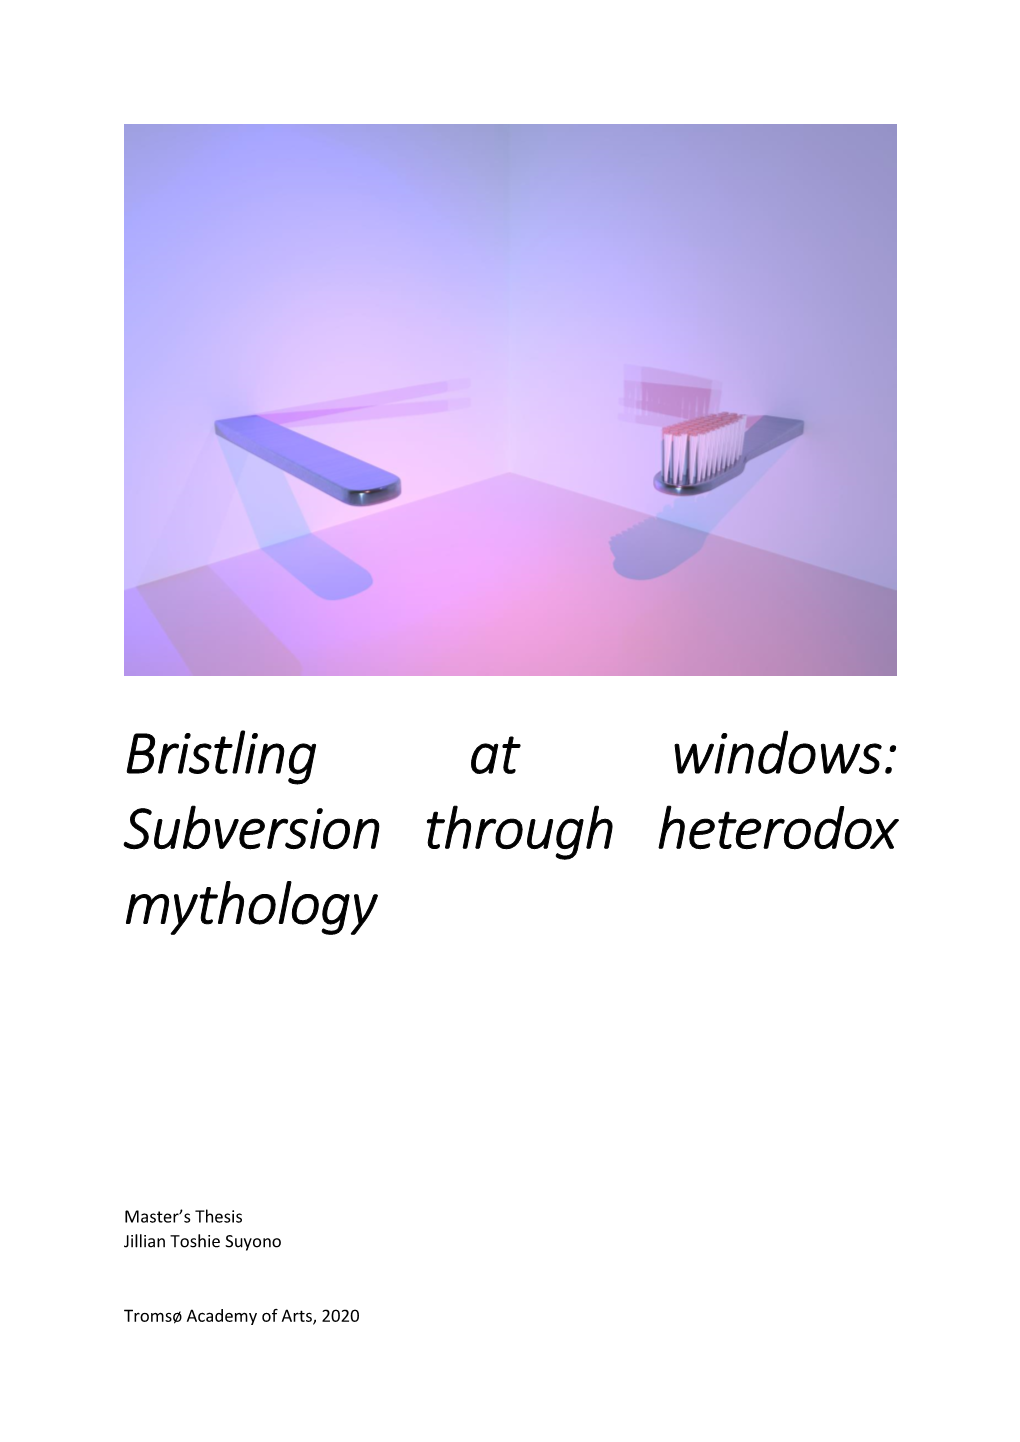 Bristling at Windows: Subversion Through Heterodox Mythology